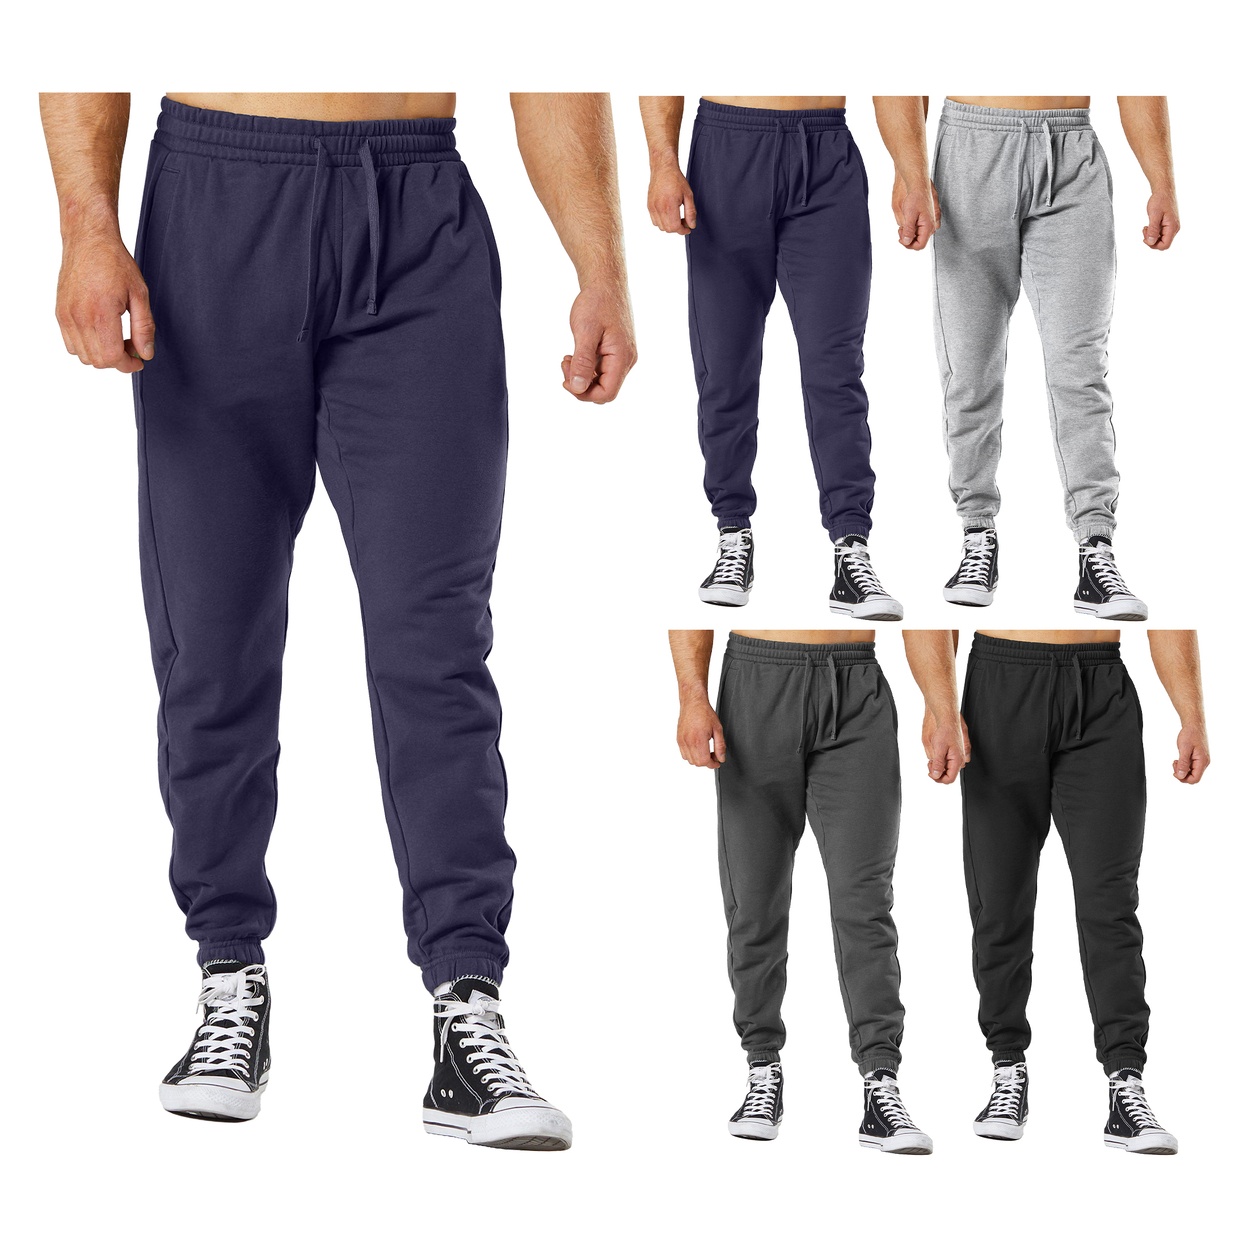 2-Pack: Men's Ultra-Soft Cozy Winter Warm Casual Fleece-Lined Sweatpants Jogger - Black & Grey, Medium